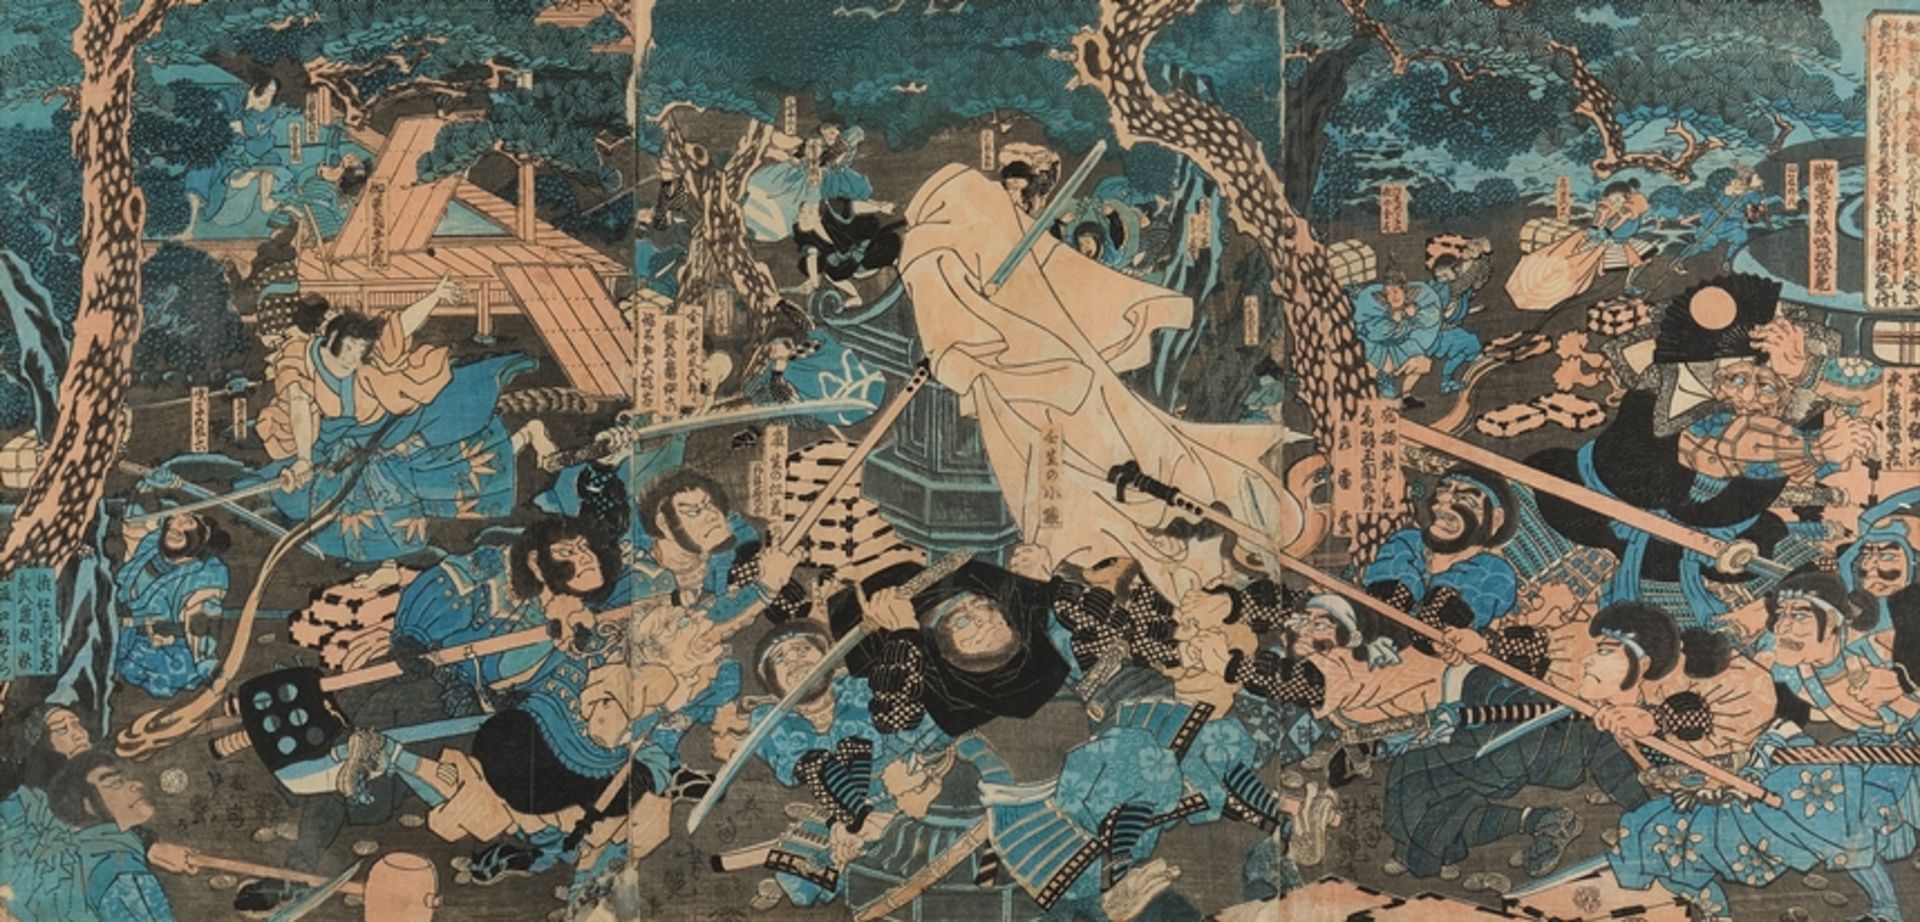 Colour woodcut, , "Battle scene", Japan, 19th century, triptych, probably Utagawa Yoshitora (active